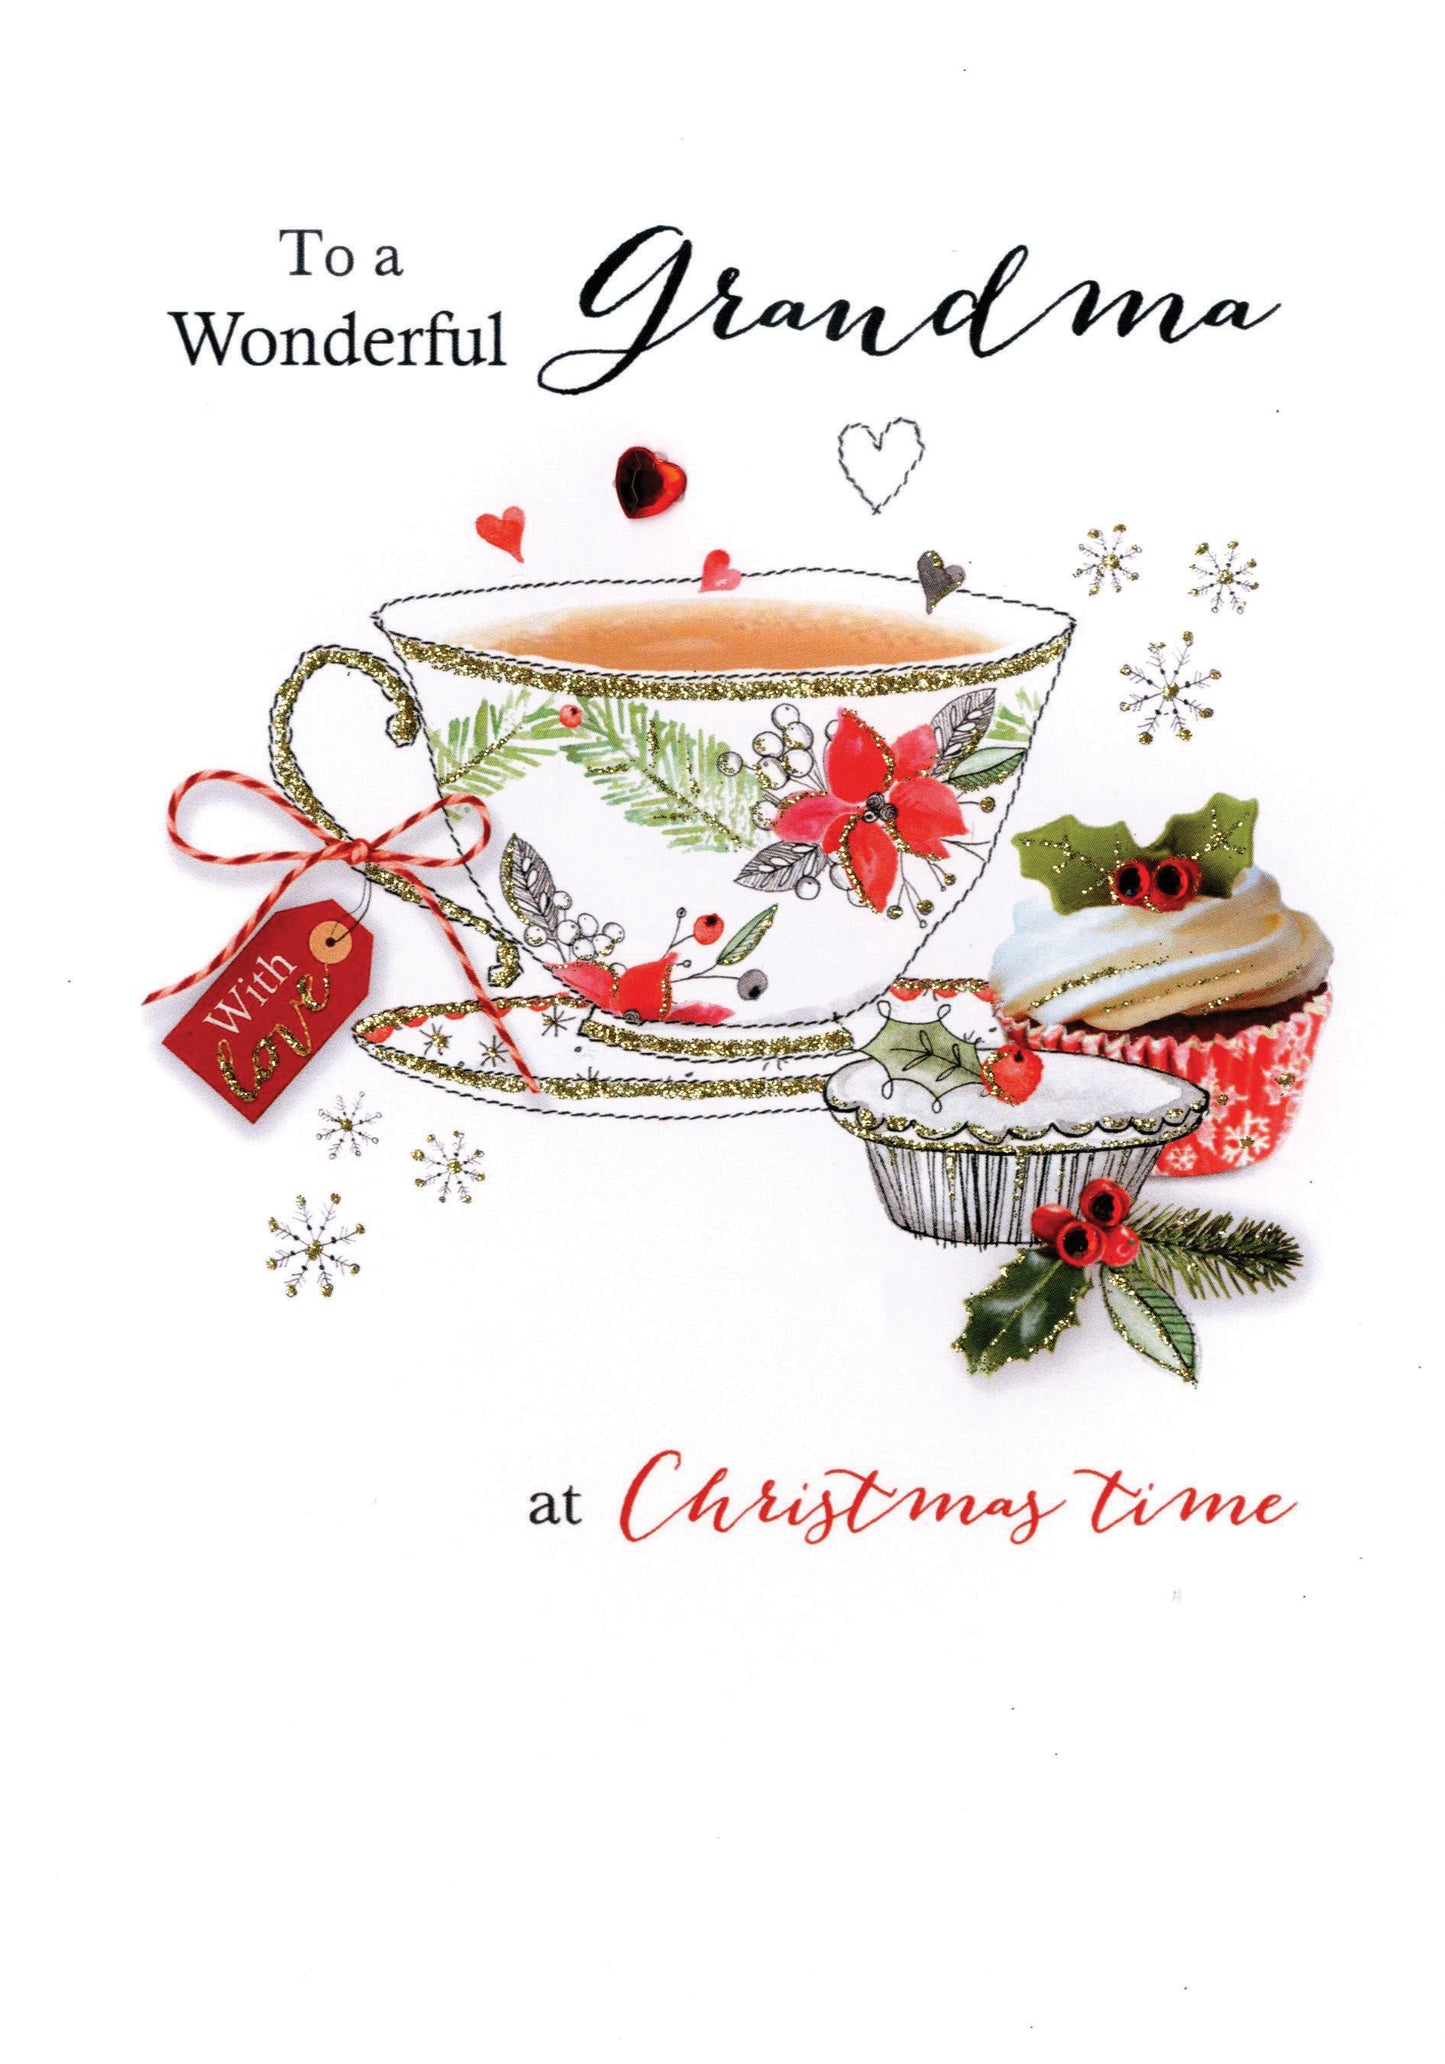 Wonderful Grandma Embellished Christmas Card